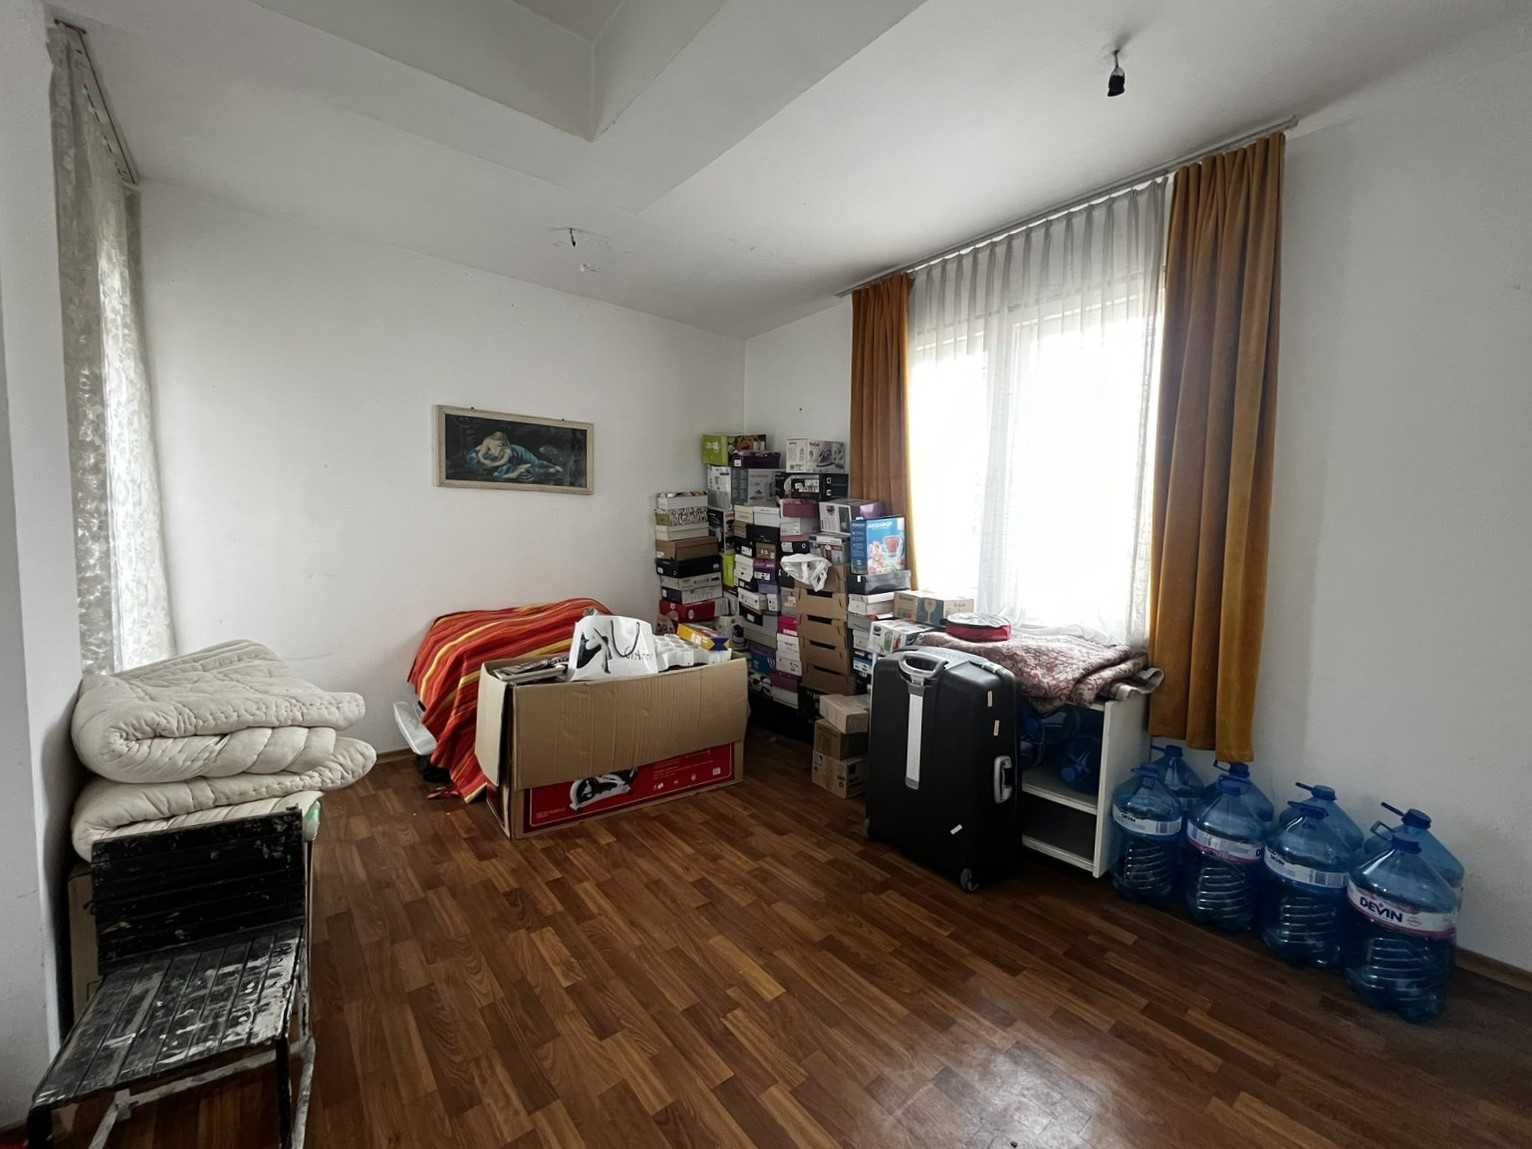 15000 - Тристаен апартамент в център на гр. Габрово